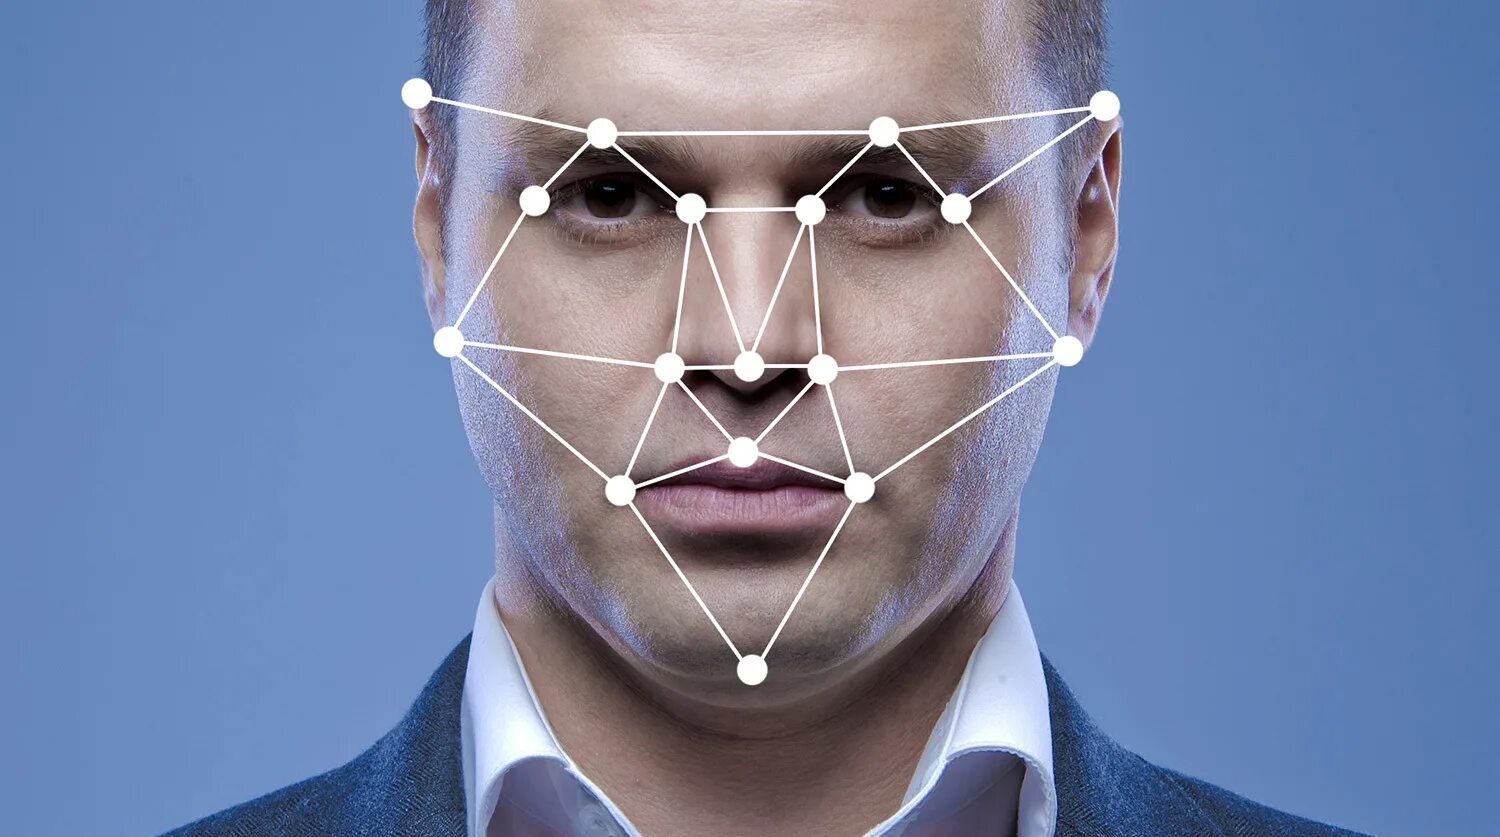 Нейросети распознавание лиц. Геометрия лица. Идентификация человеческого лица. Биометрия лица.